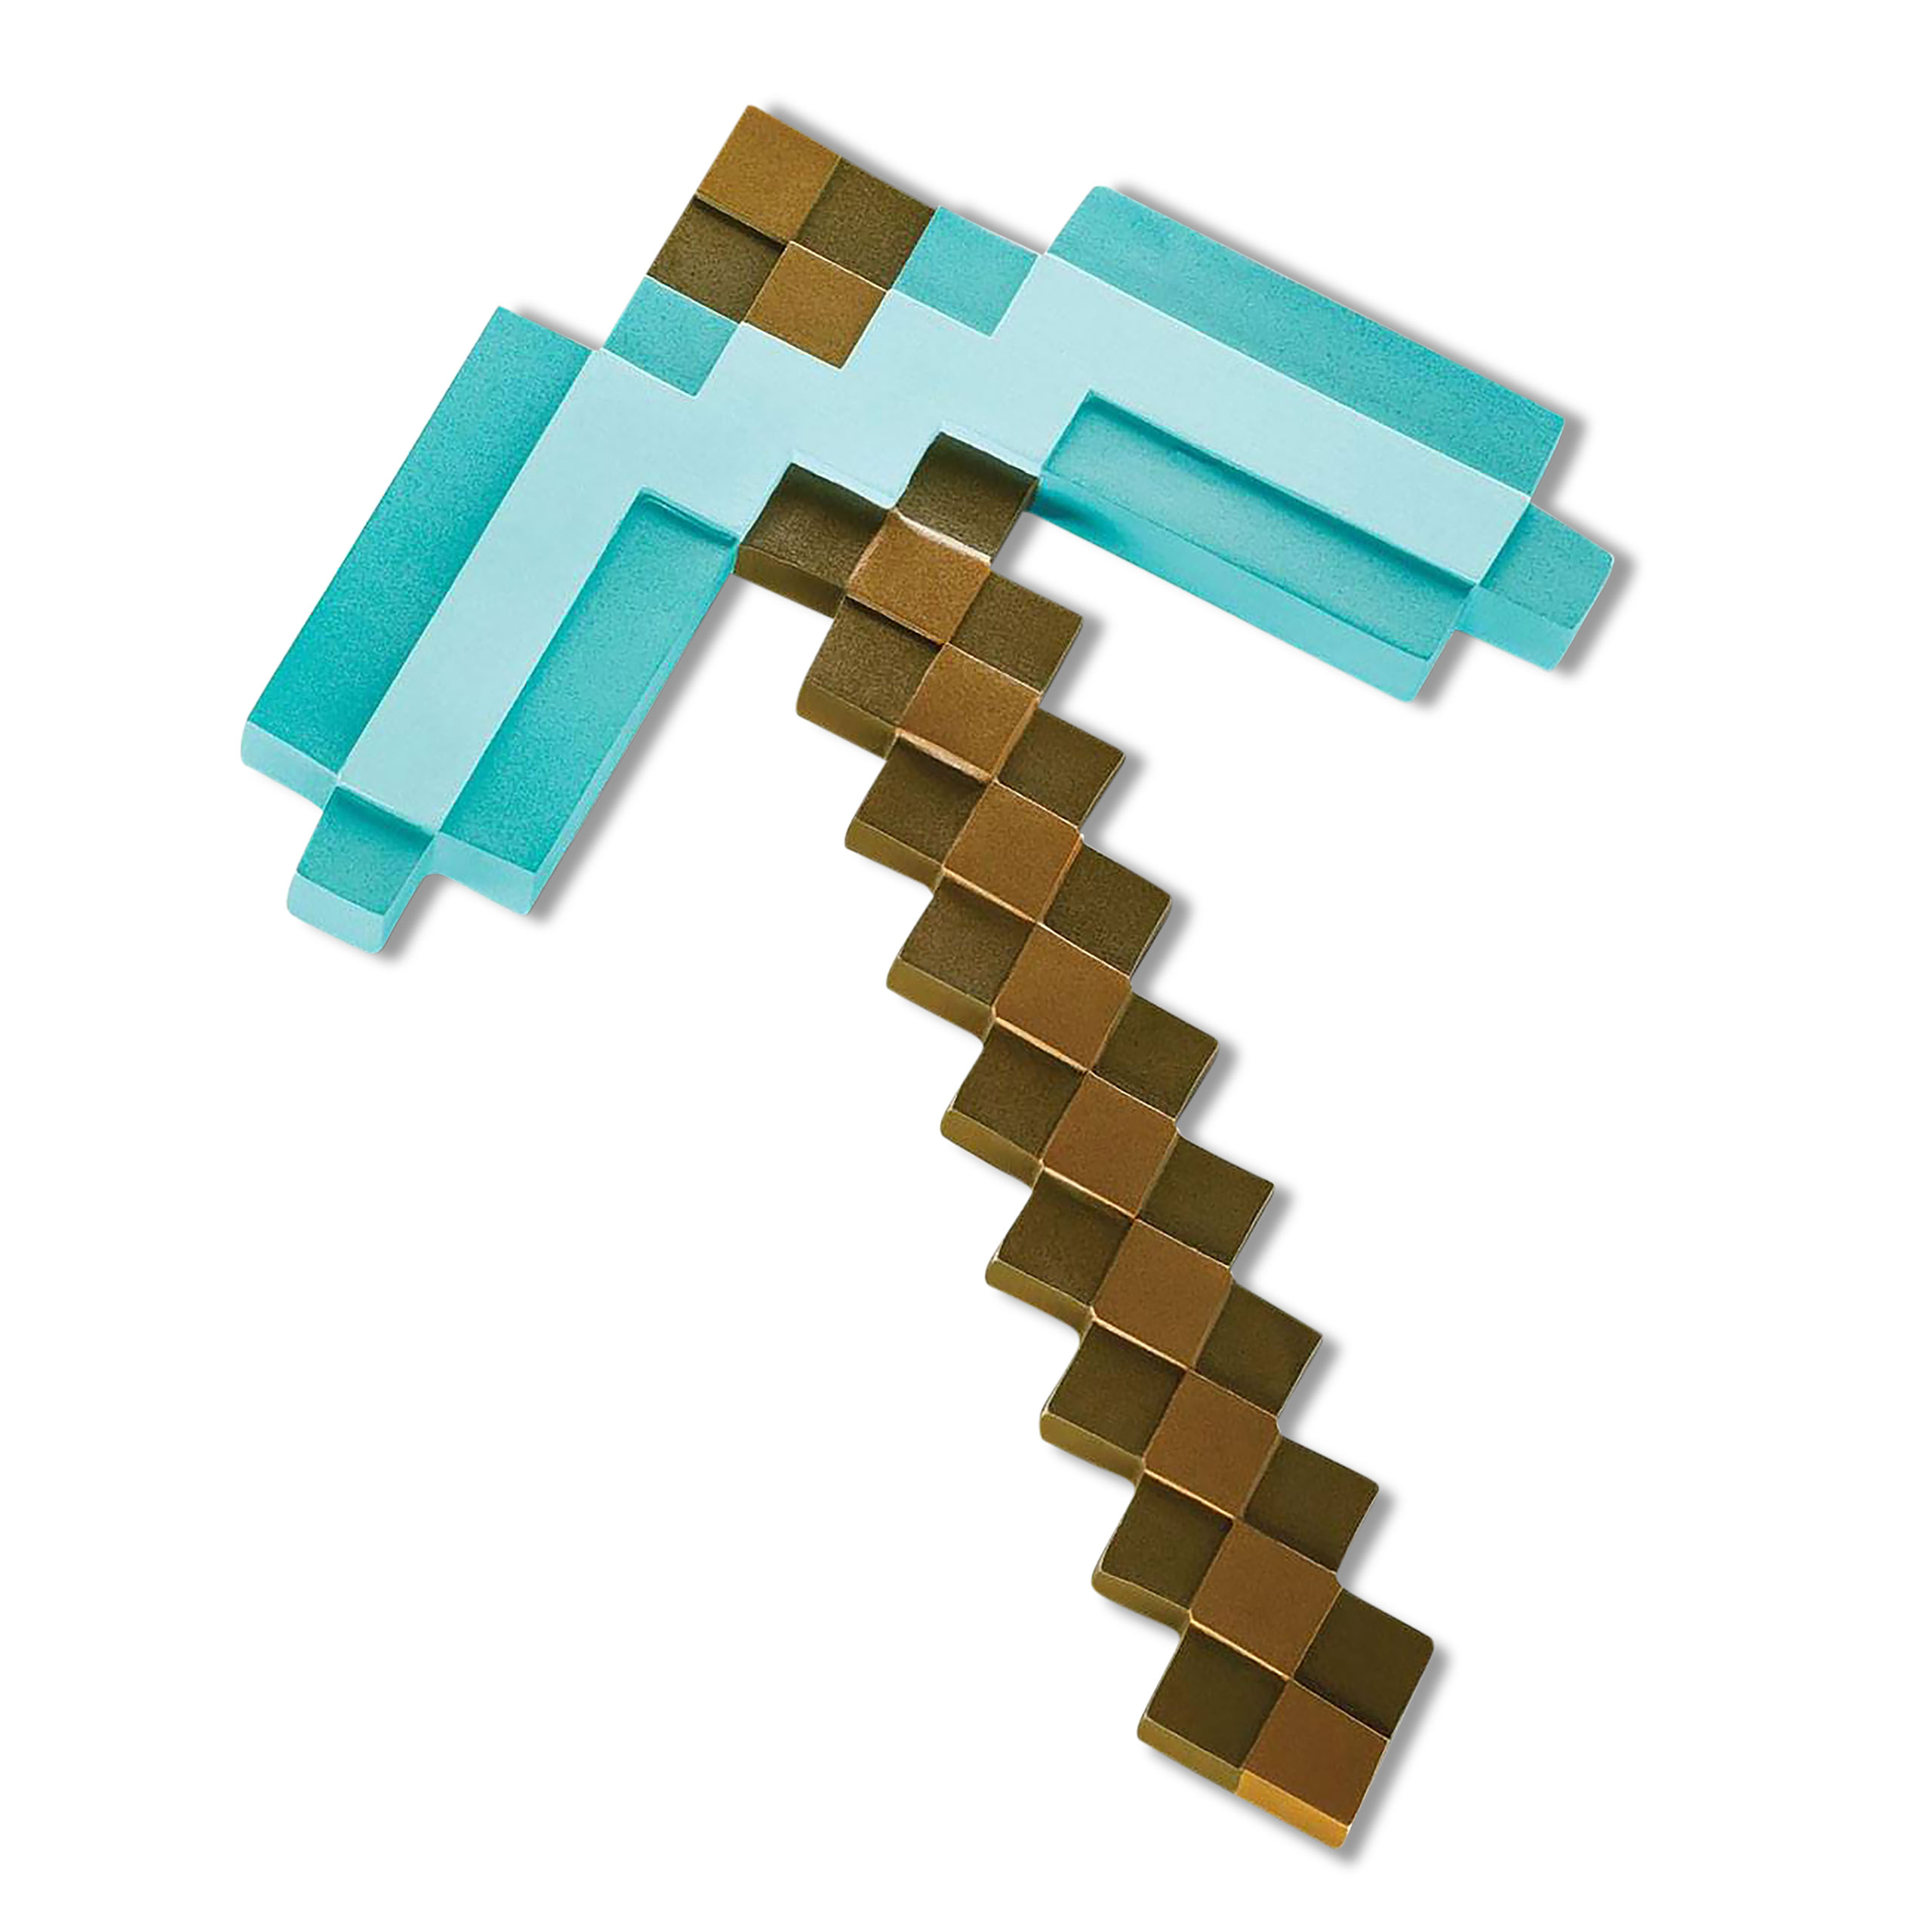 Minecraft - Diamant Spitzhacke Schaumstoff Replik